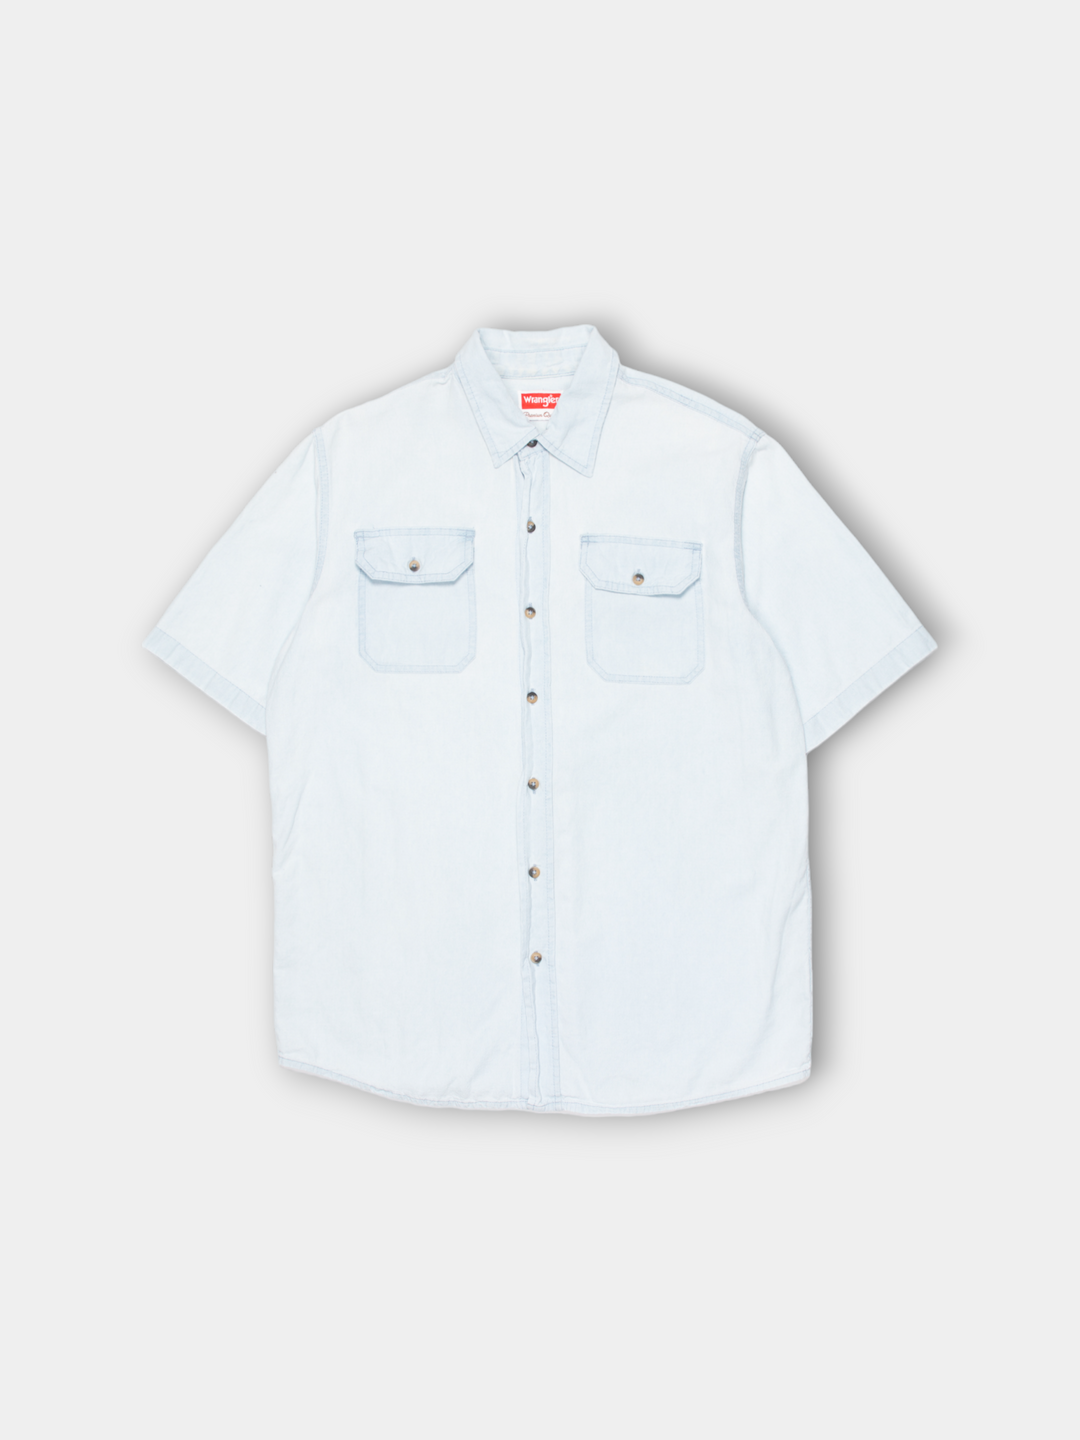 Vintage Wrangler Cotton Shirt (S)